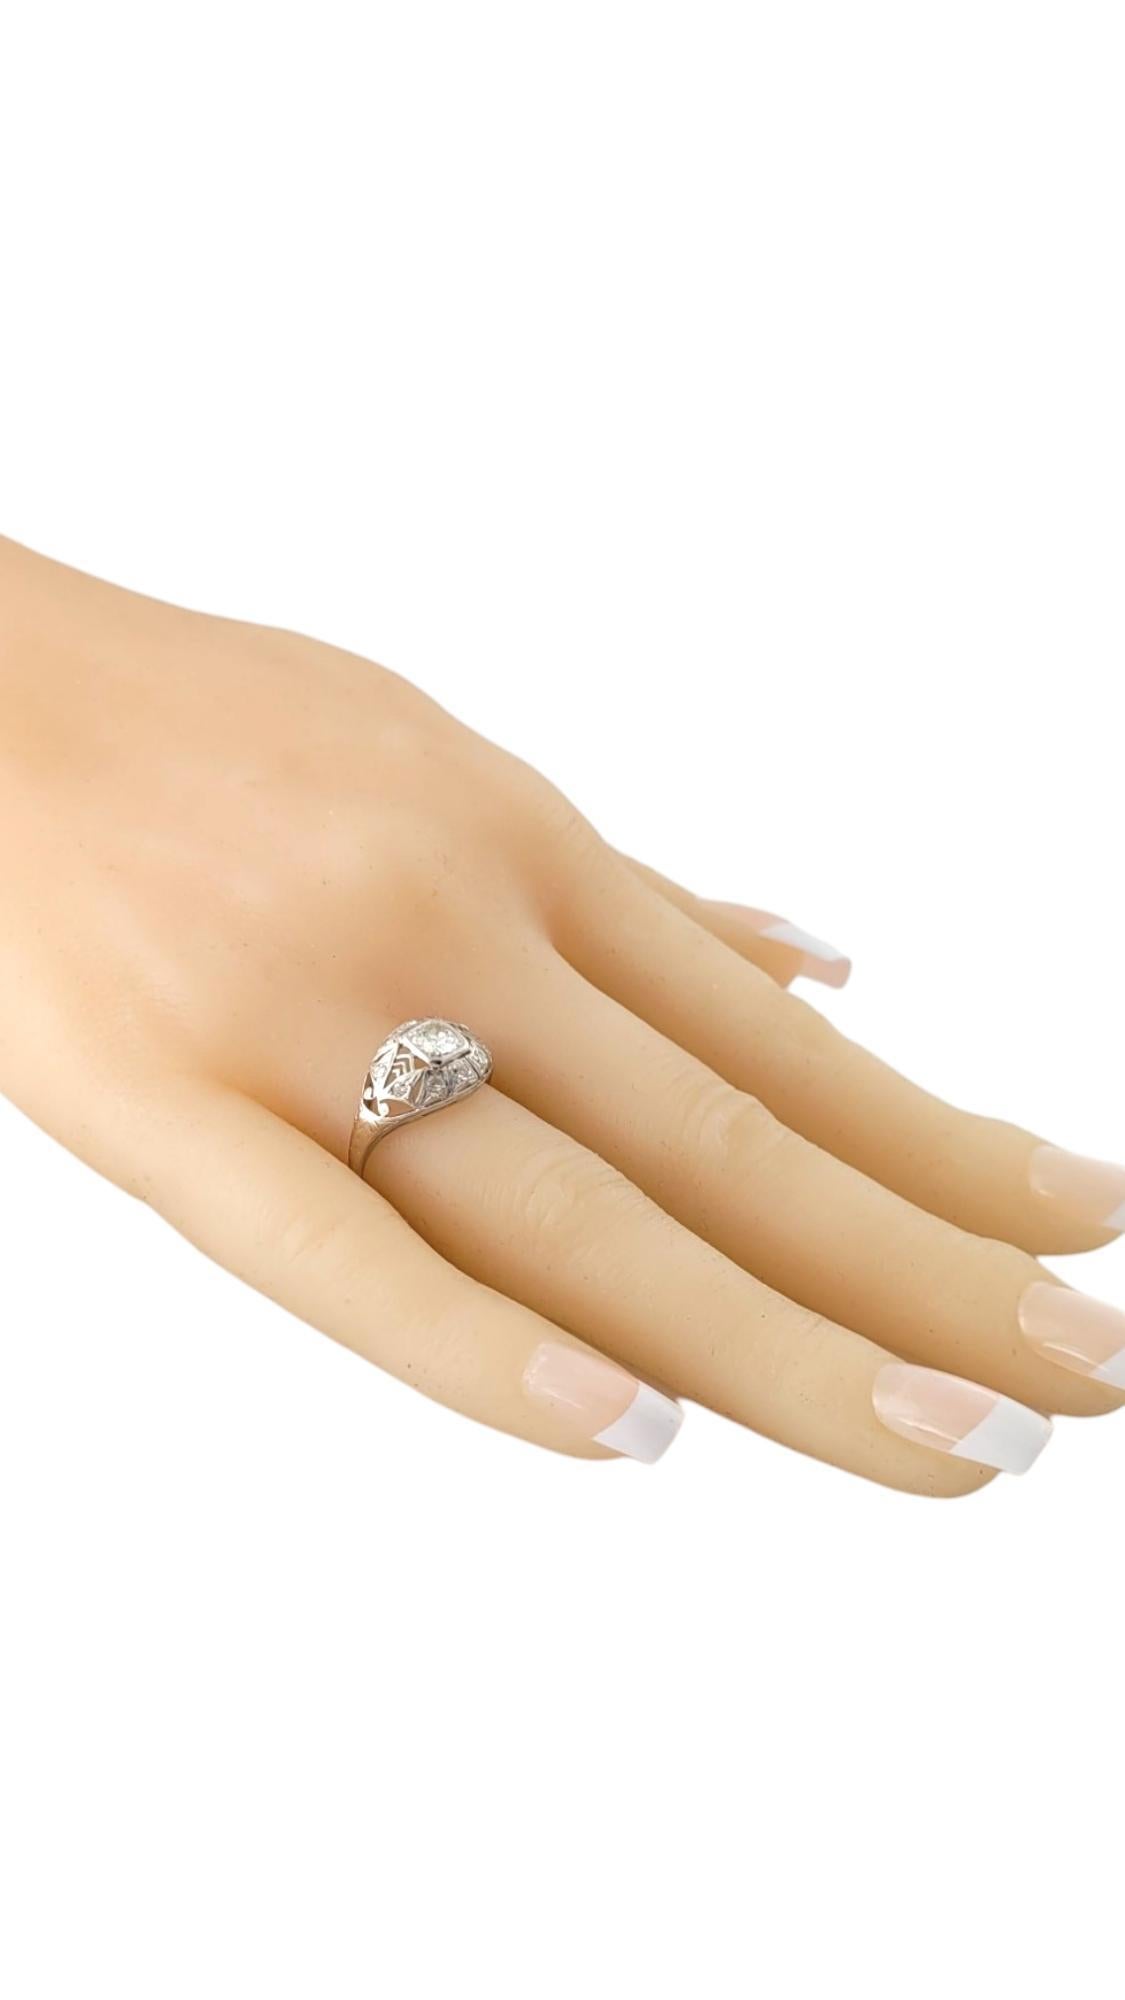 18 Karat White Gold Diamond Ring Size 5.75 #16827 For Sale 1